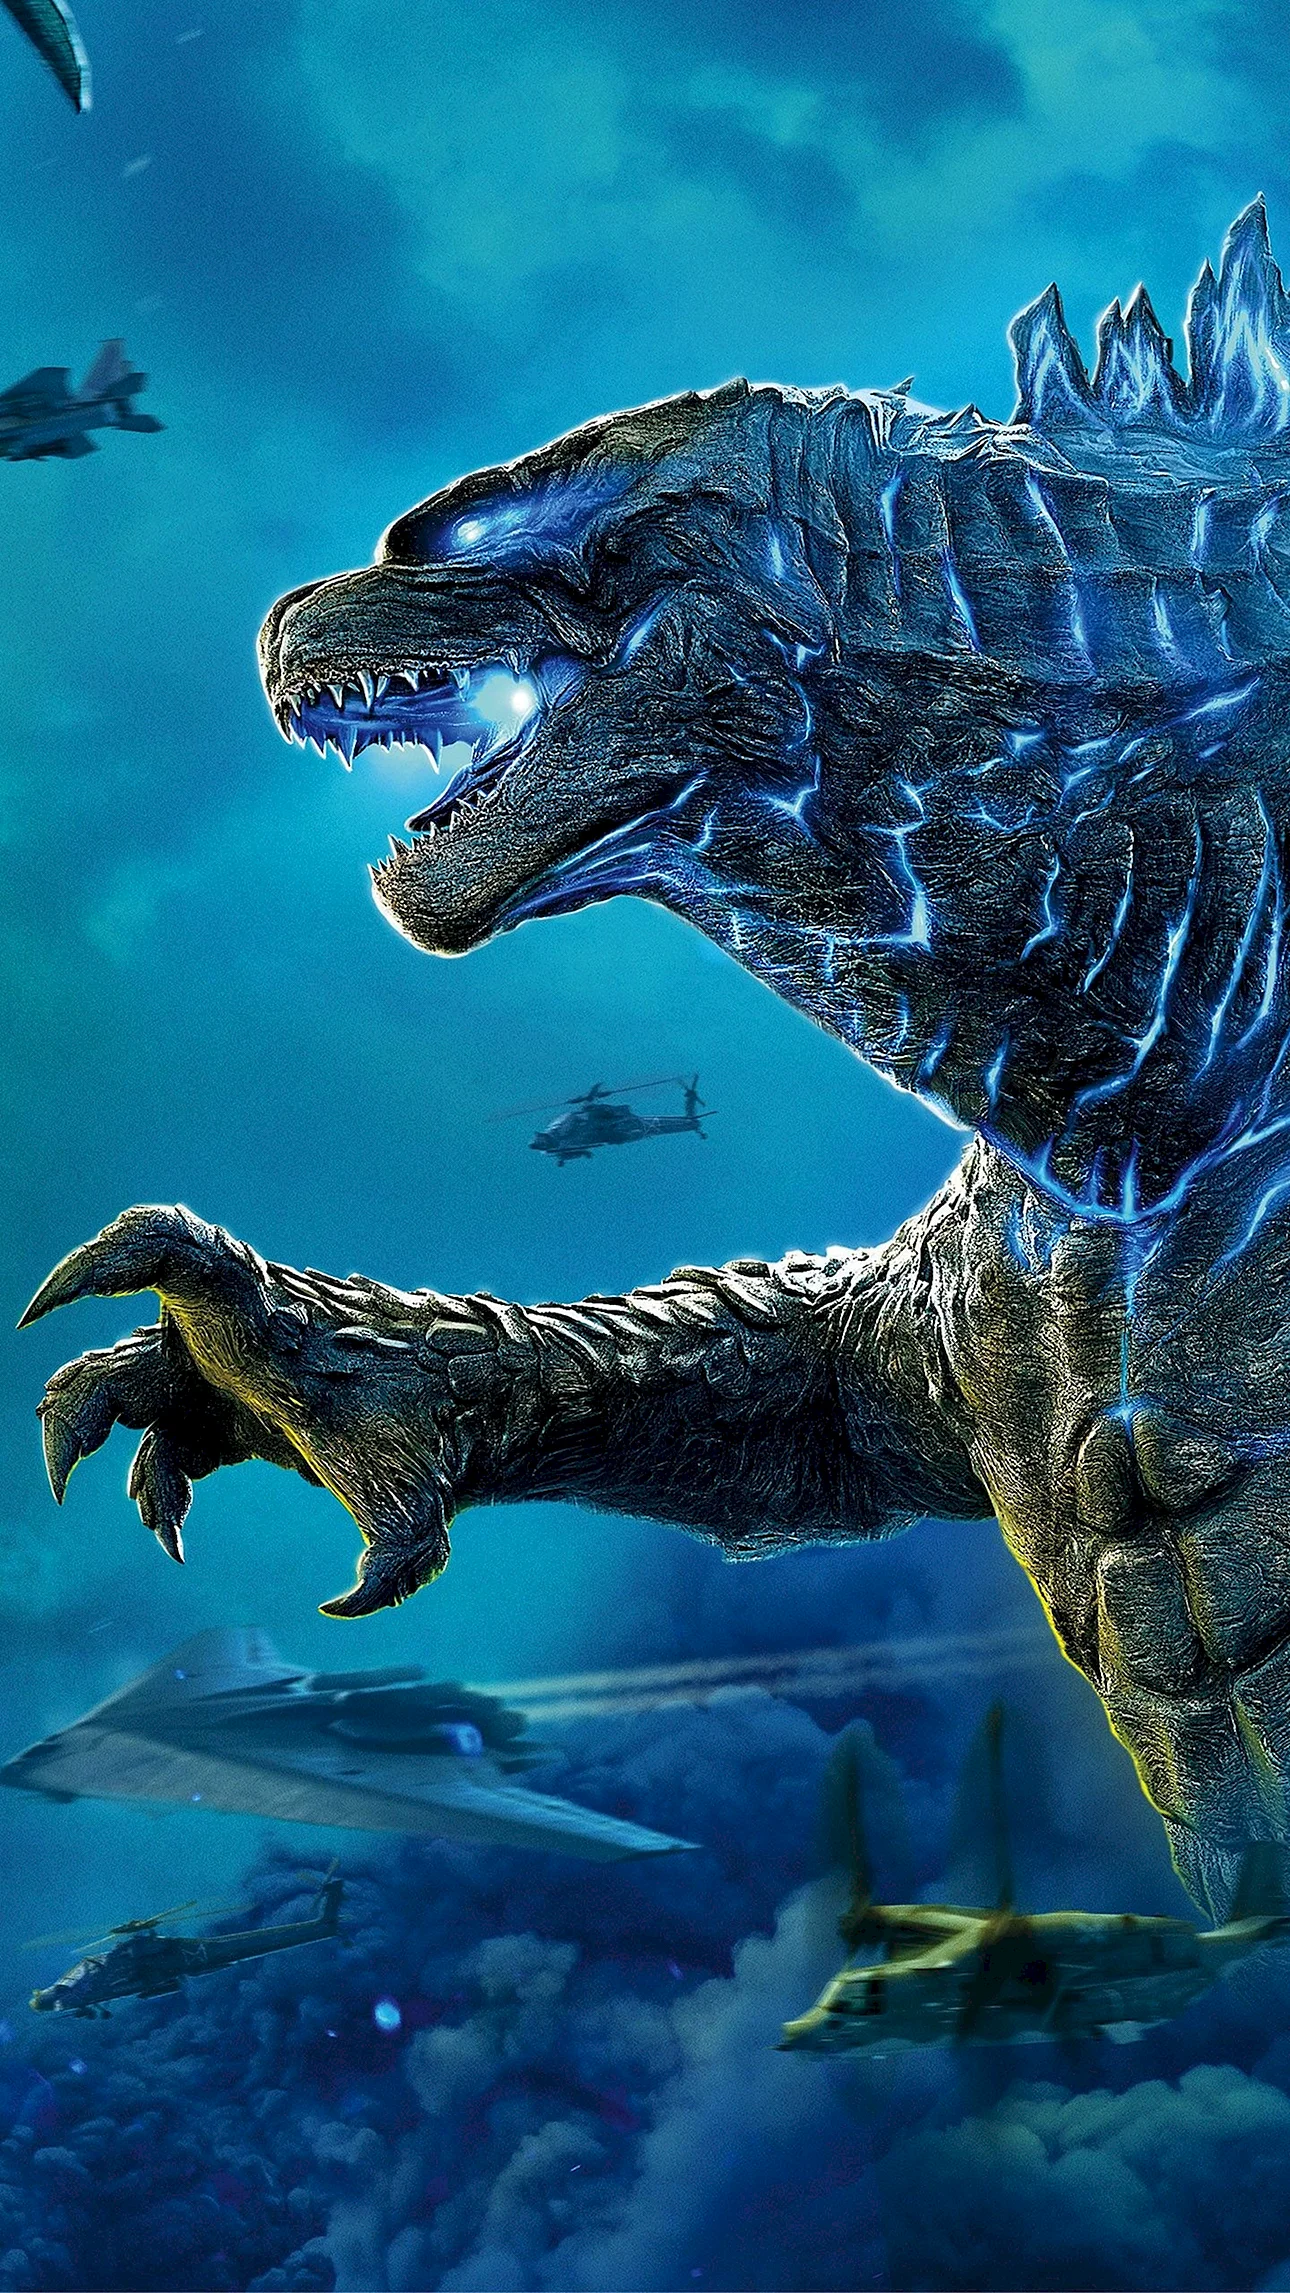 Godzilla 2014 Wallpaper For iPhone